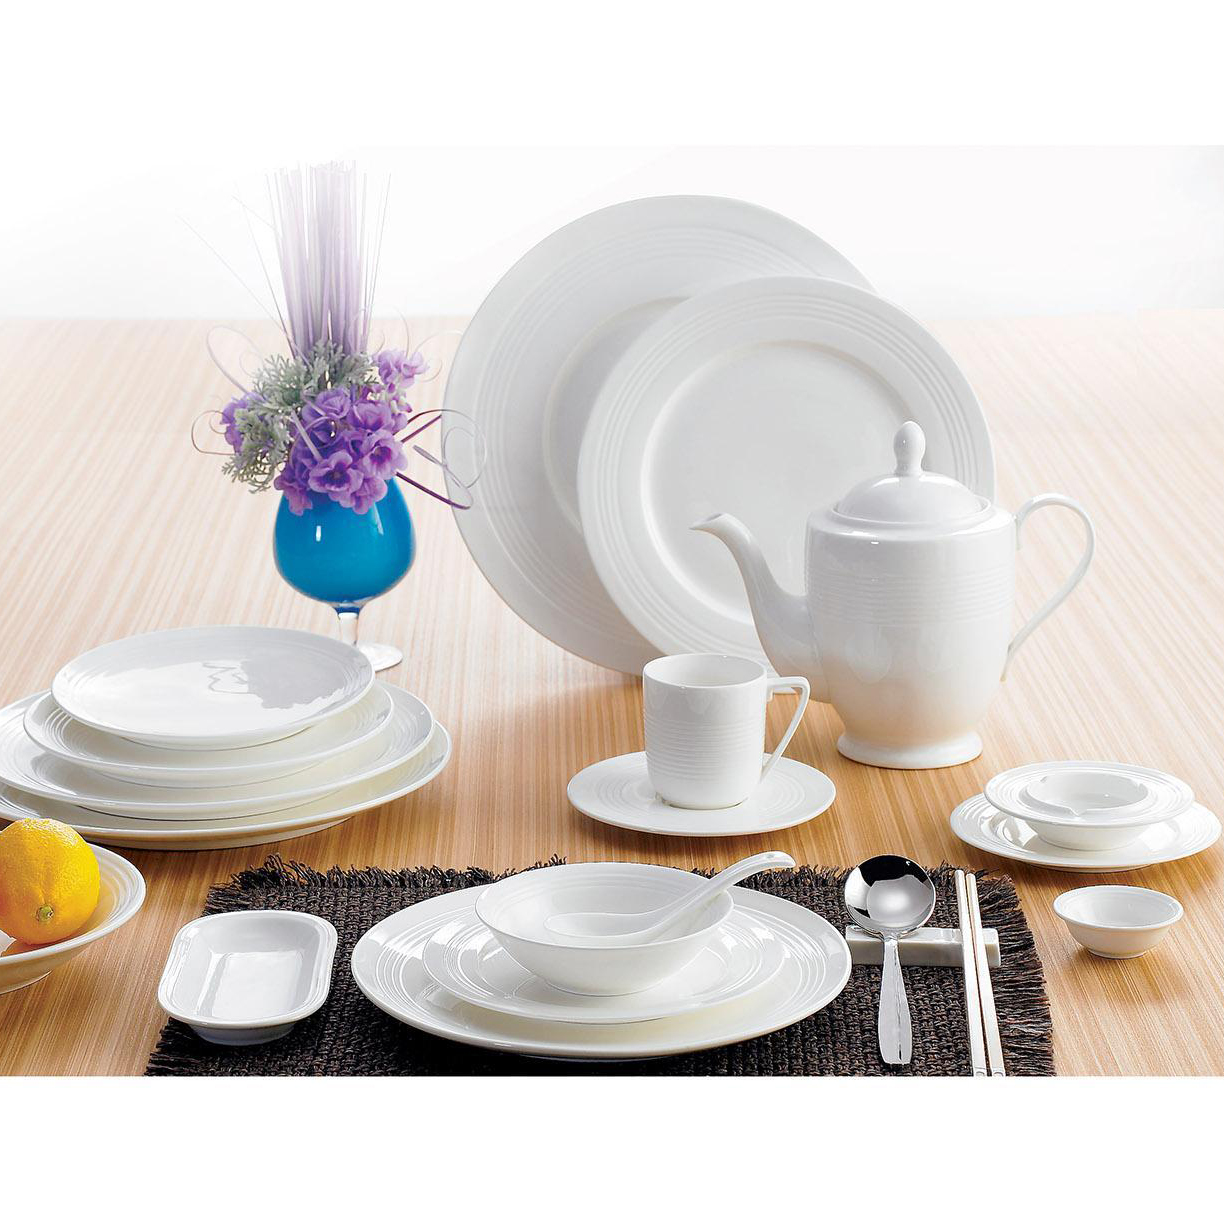 White Round Banquet Restaurant Crockery Ceramic Dish Plates Hotel Bone China Dinner Plates